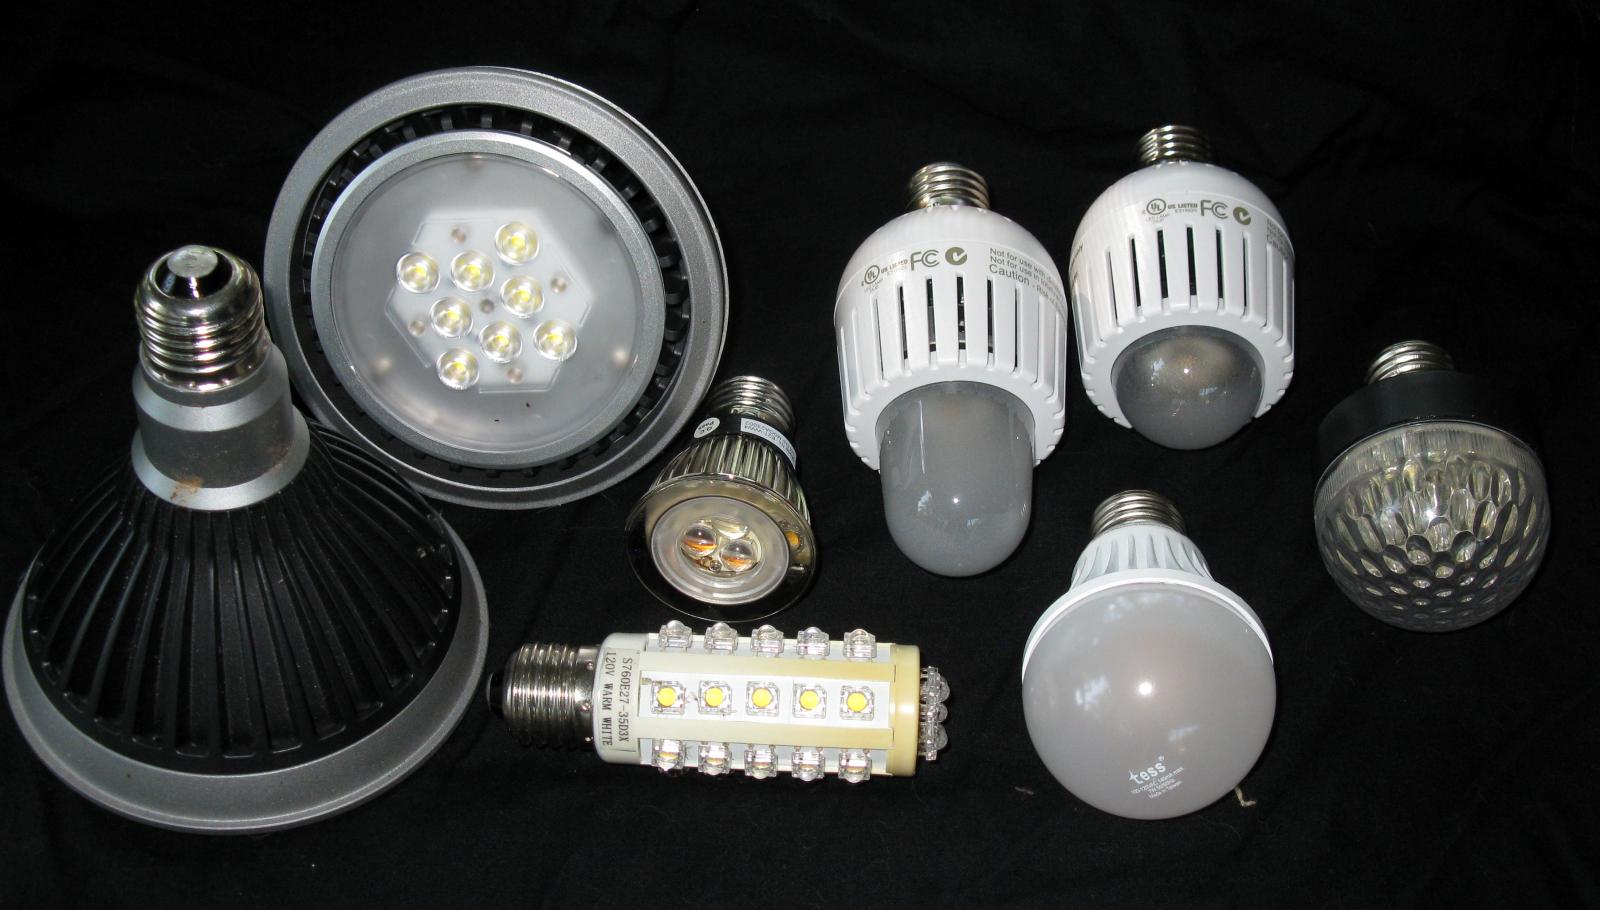 Common low-power LED lighting